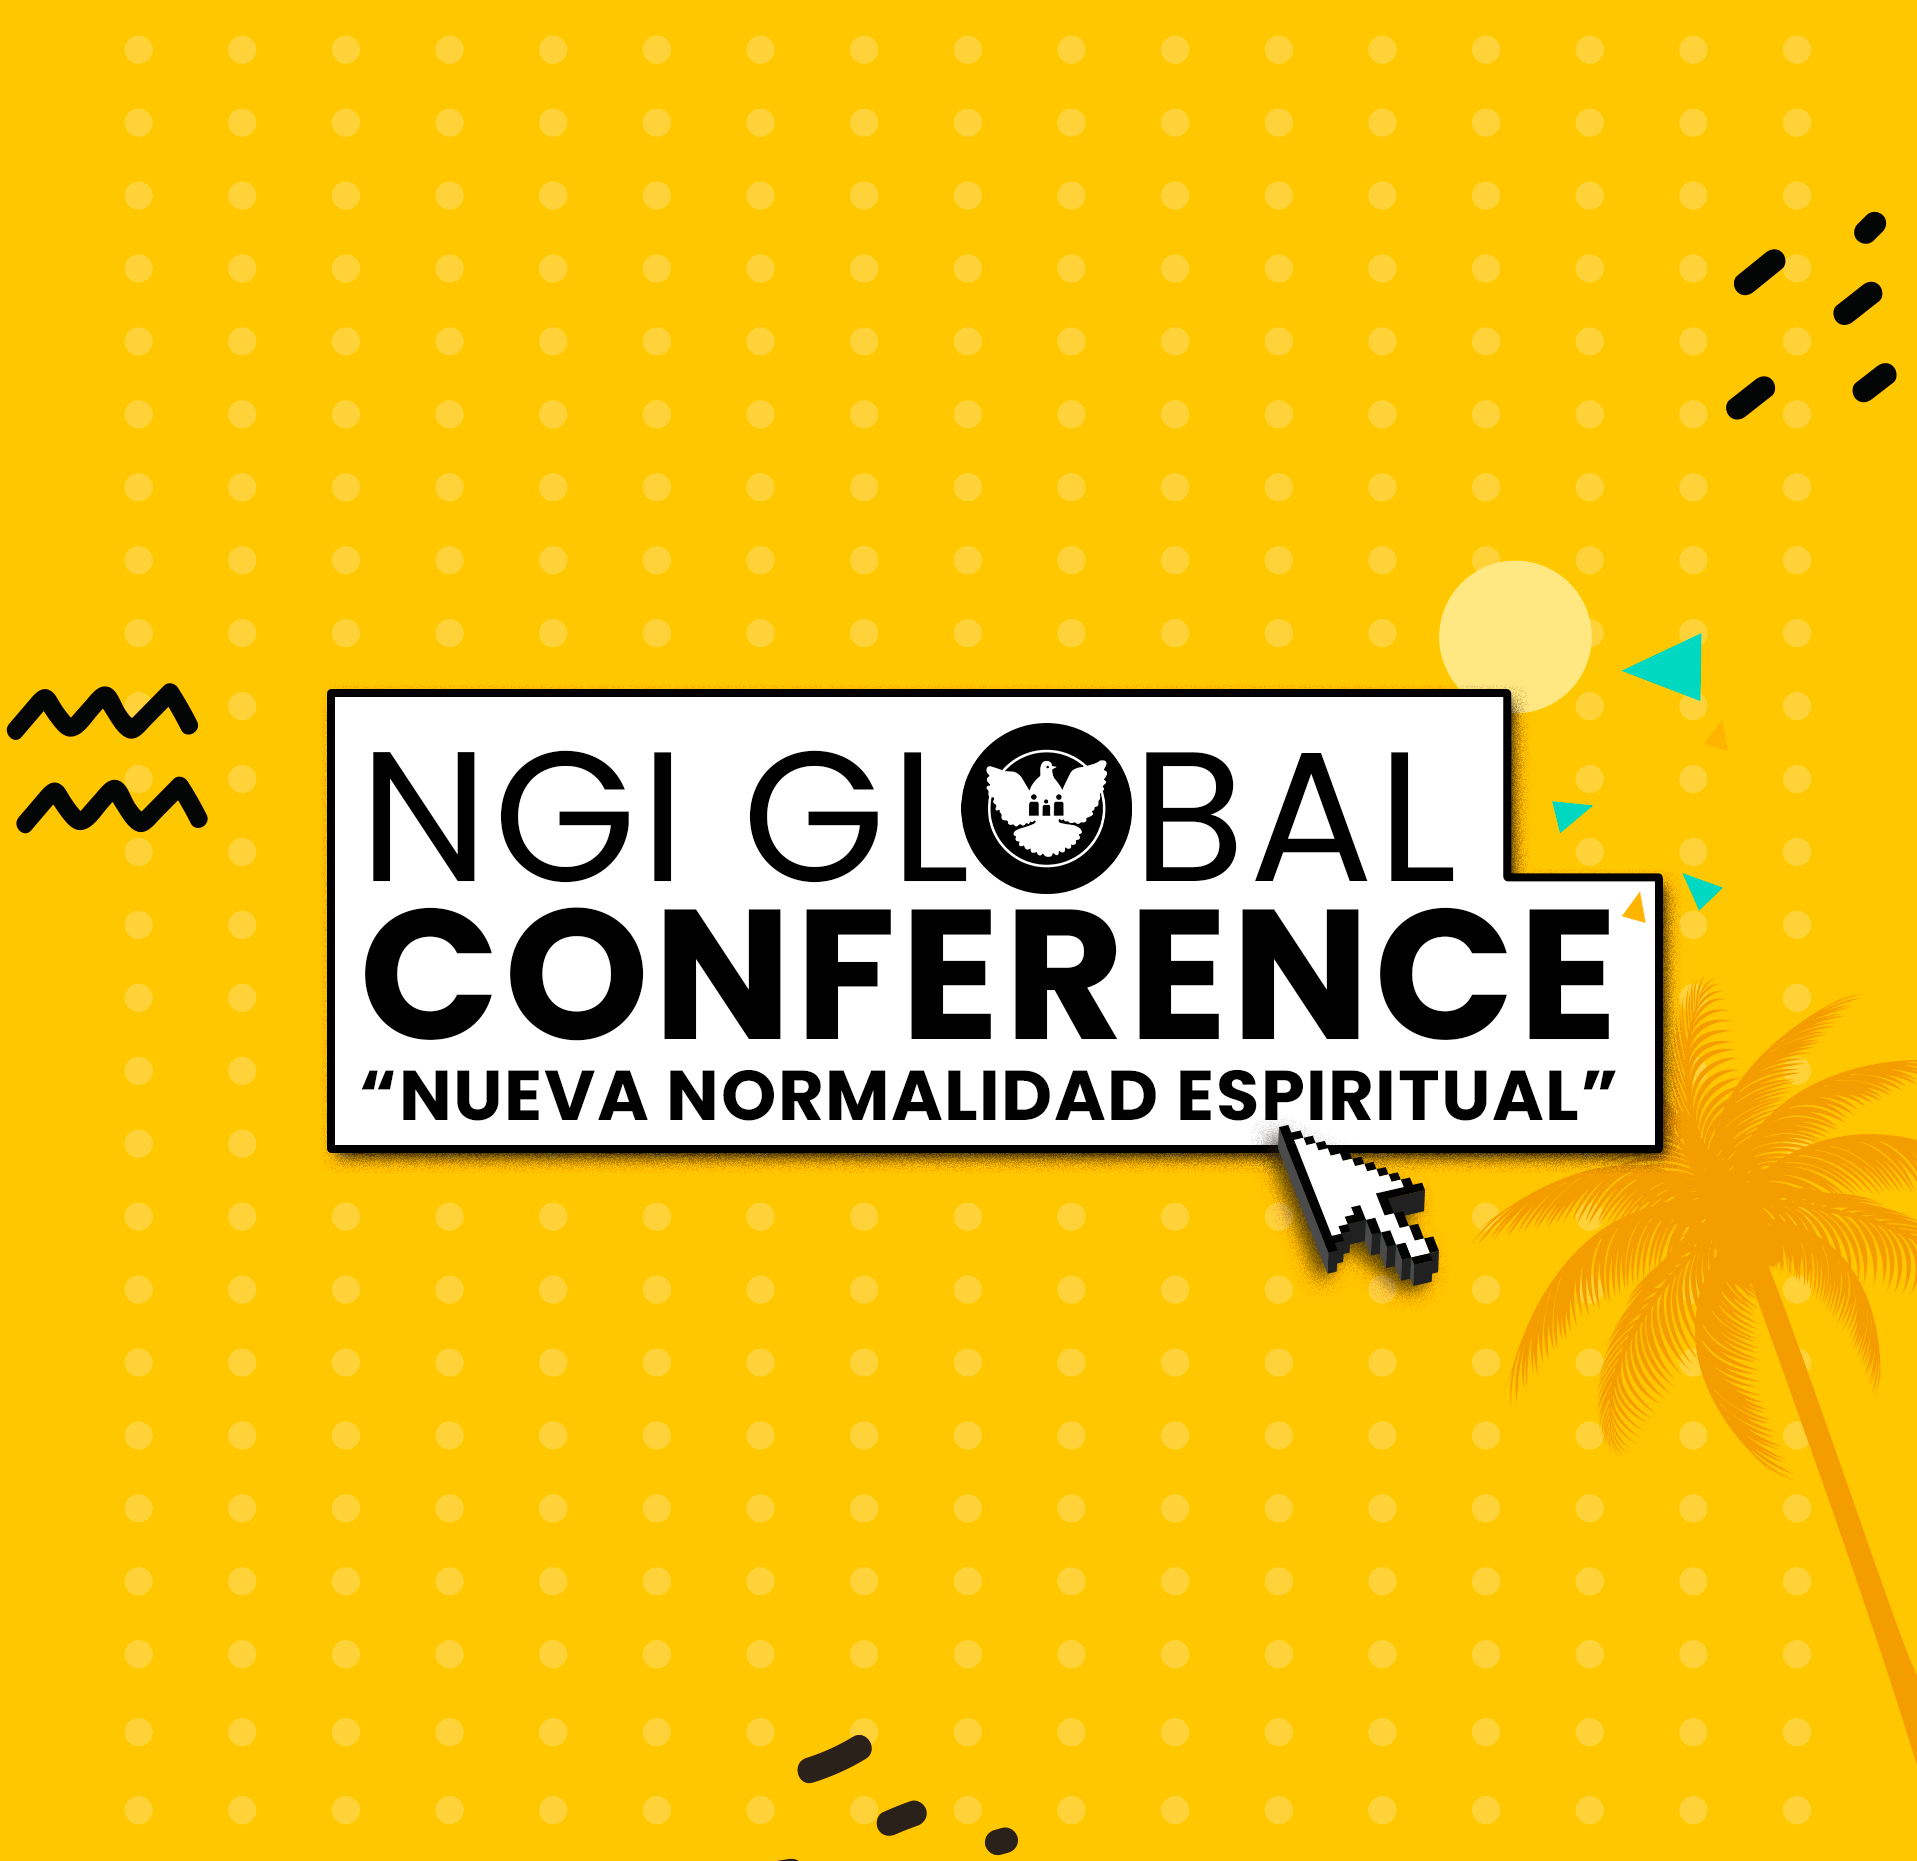 NGI Global Conference